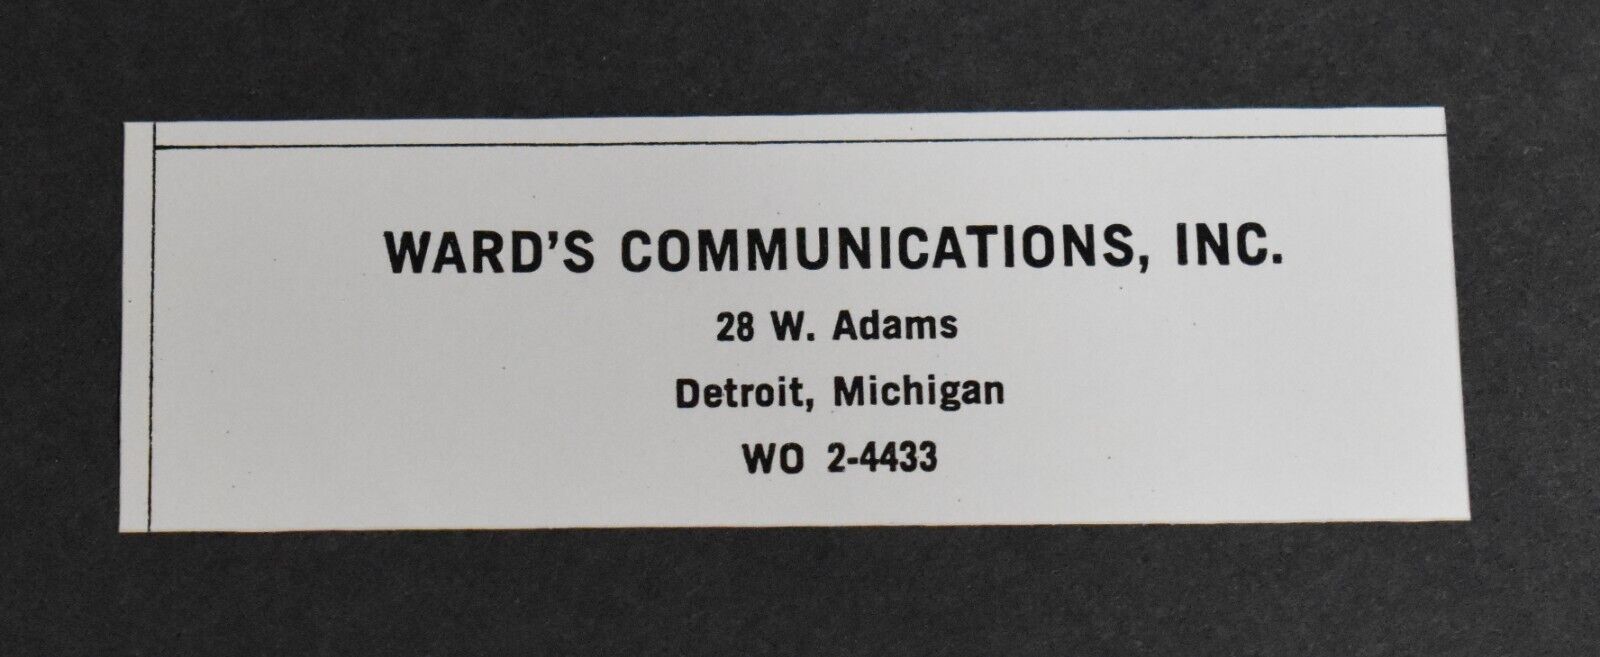 1973 Print Ad Michigan Detroit 28 W Adams Ward\'s Communications Inc art